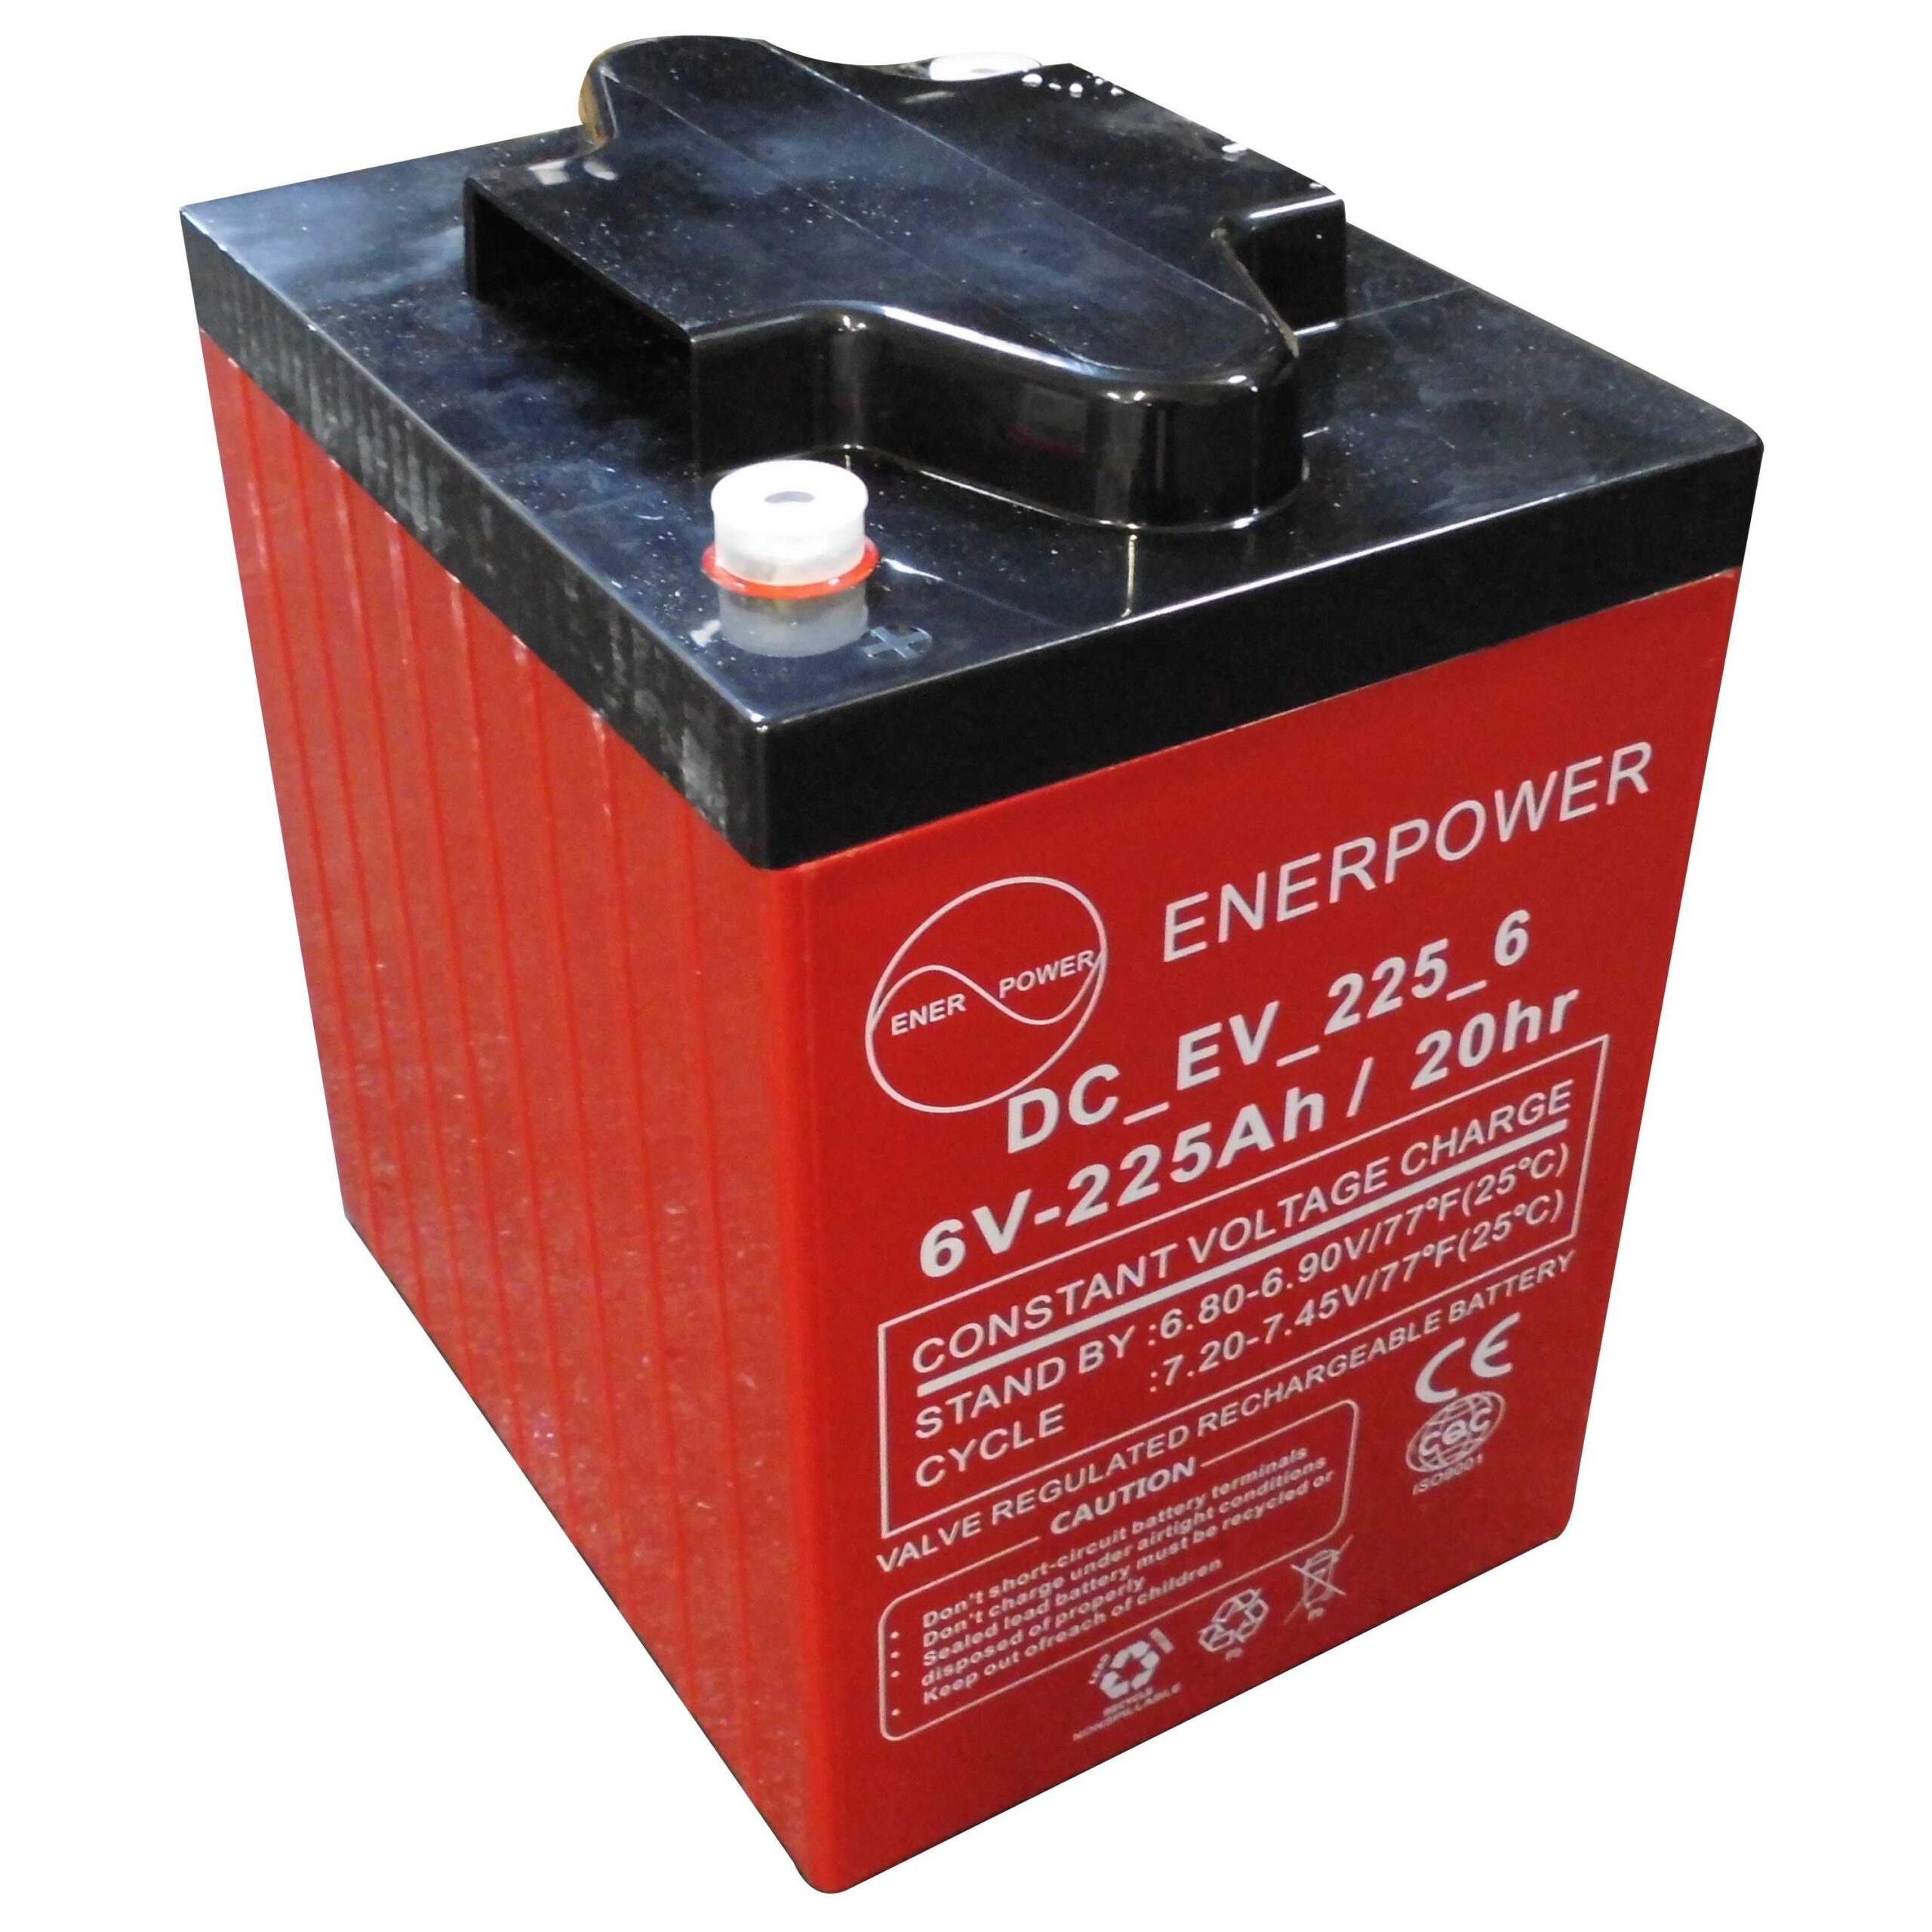 DCEV225-6 6v 225ah deep cycle ENERPOWER battery